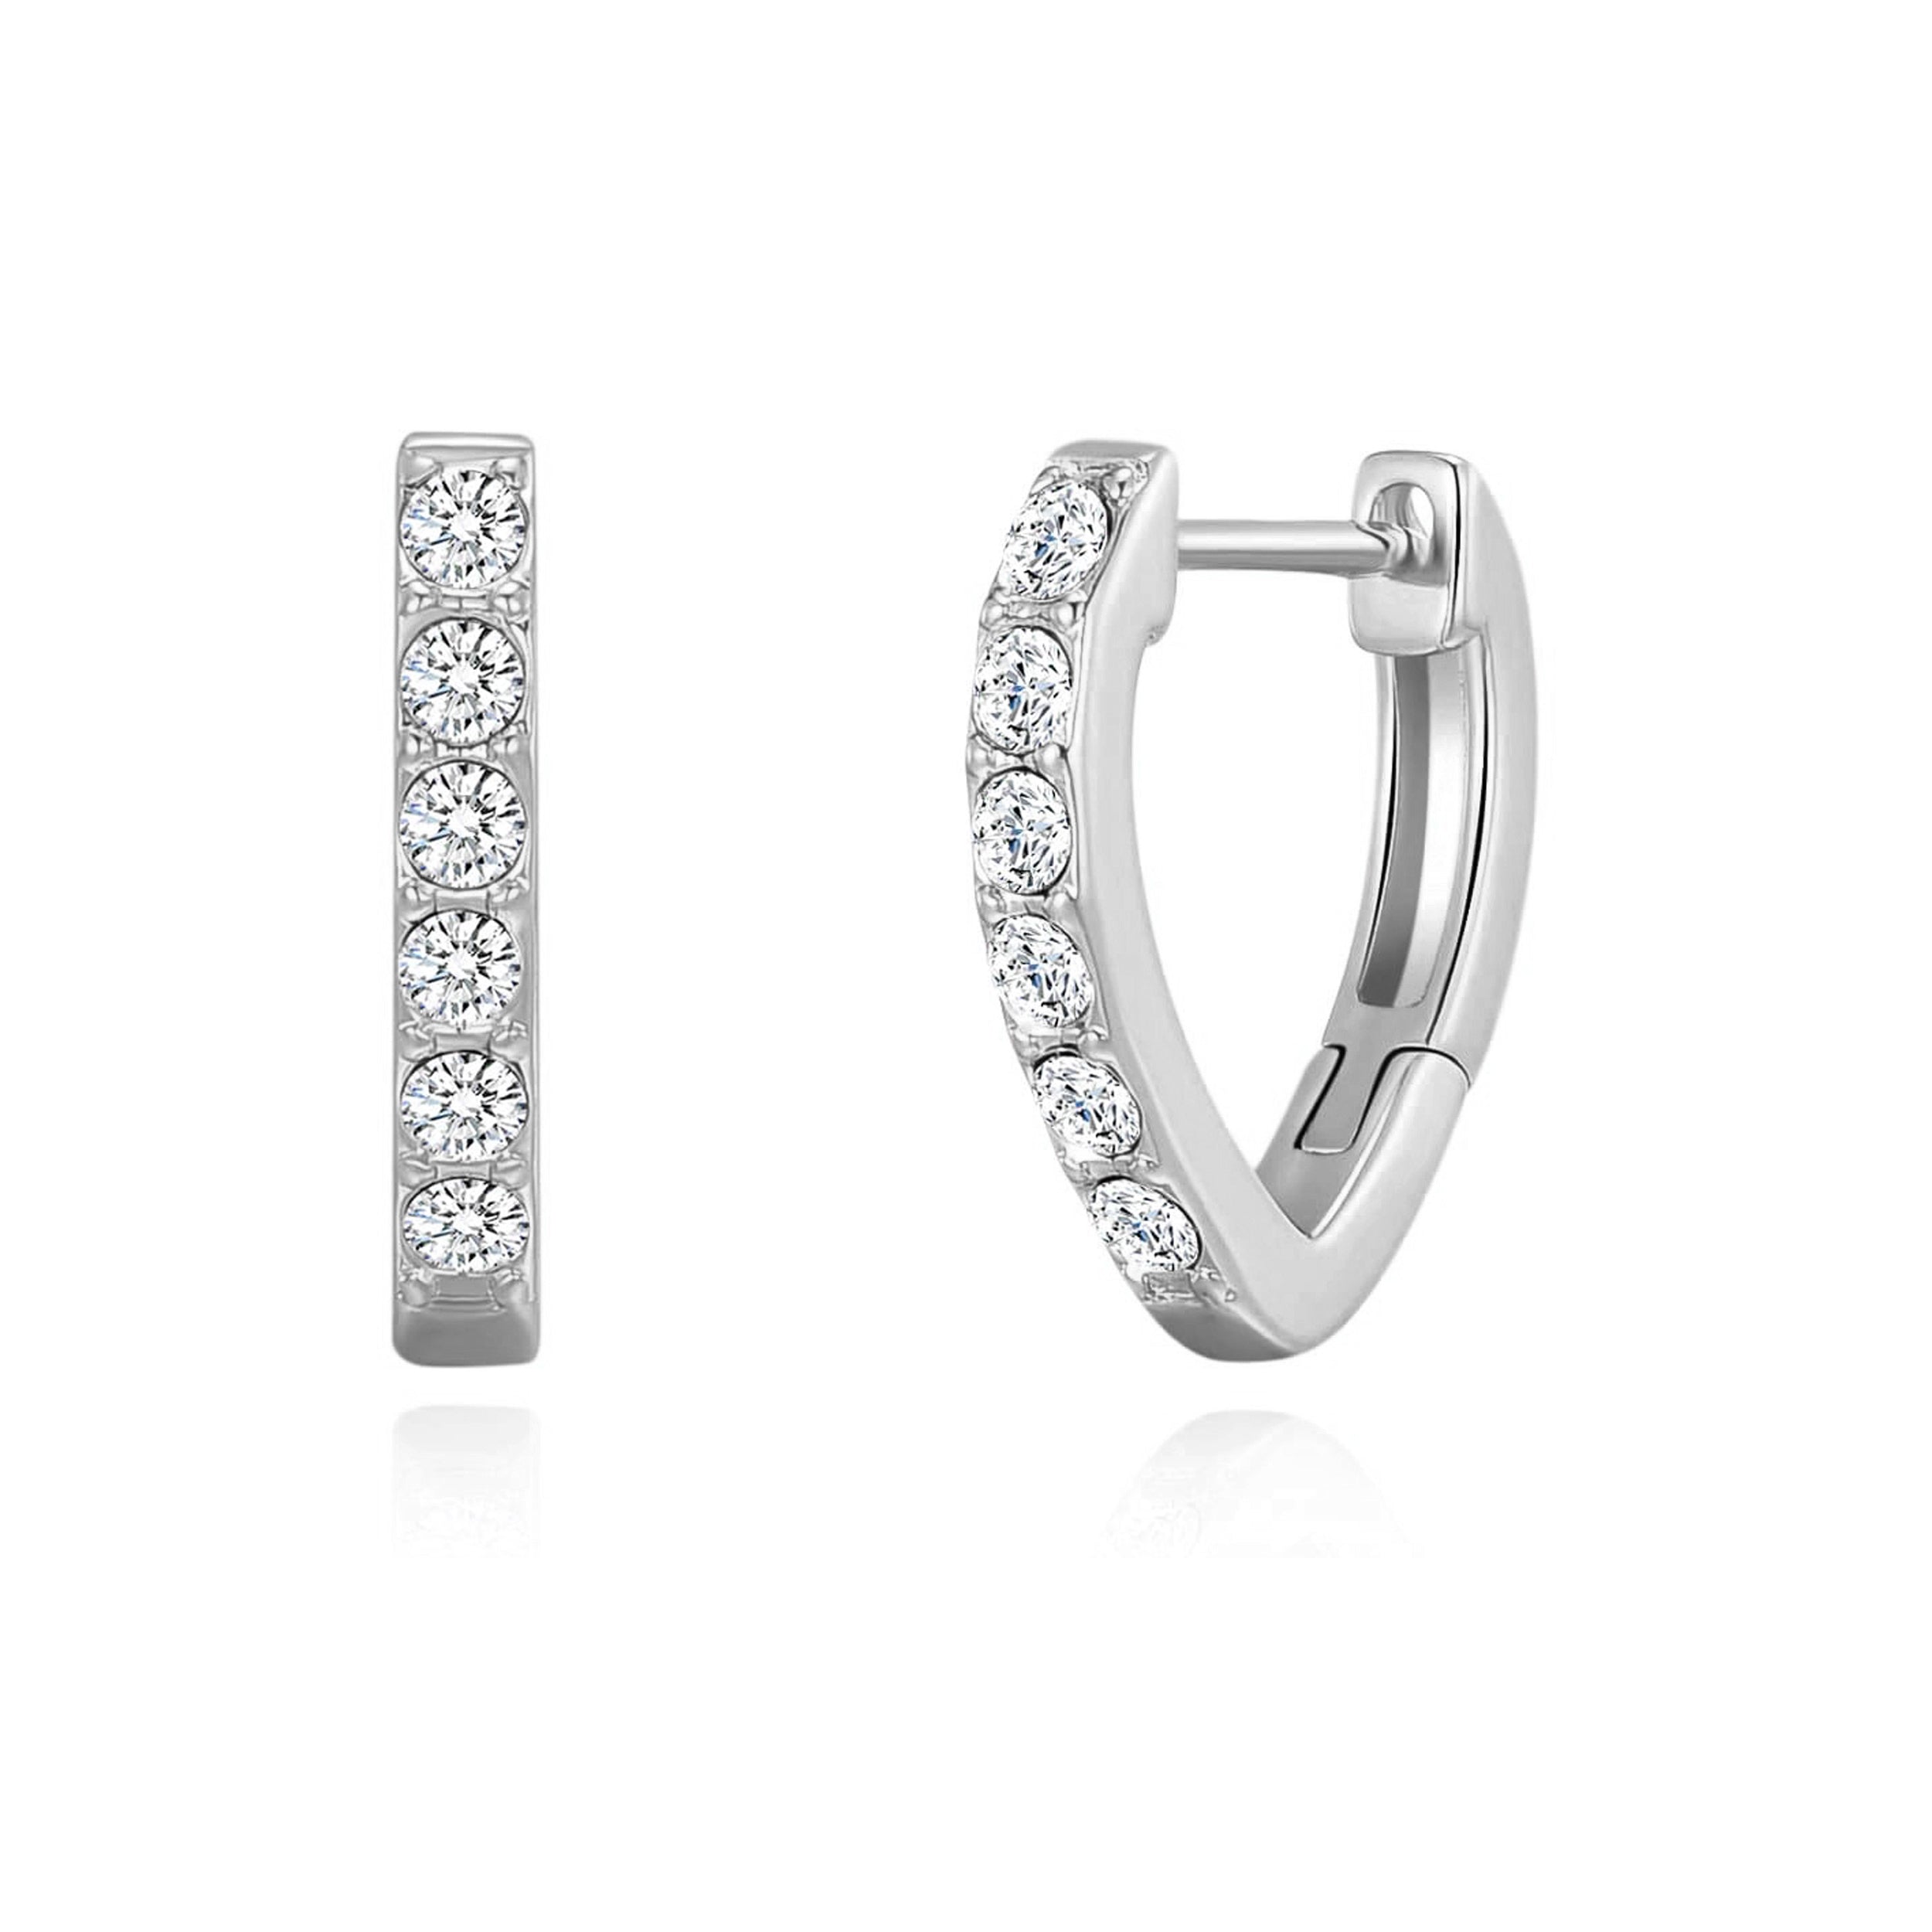 Silver Plated Huggie Hoop Earrings Created with Zircondia® Crystals